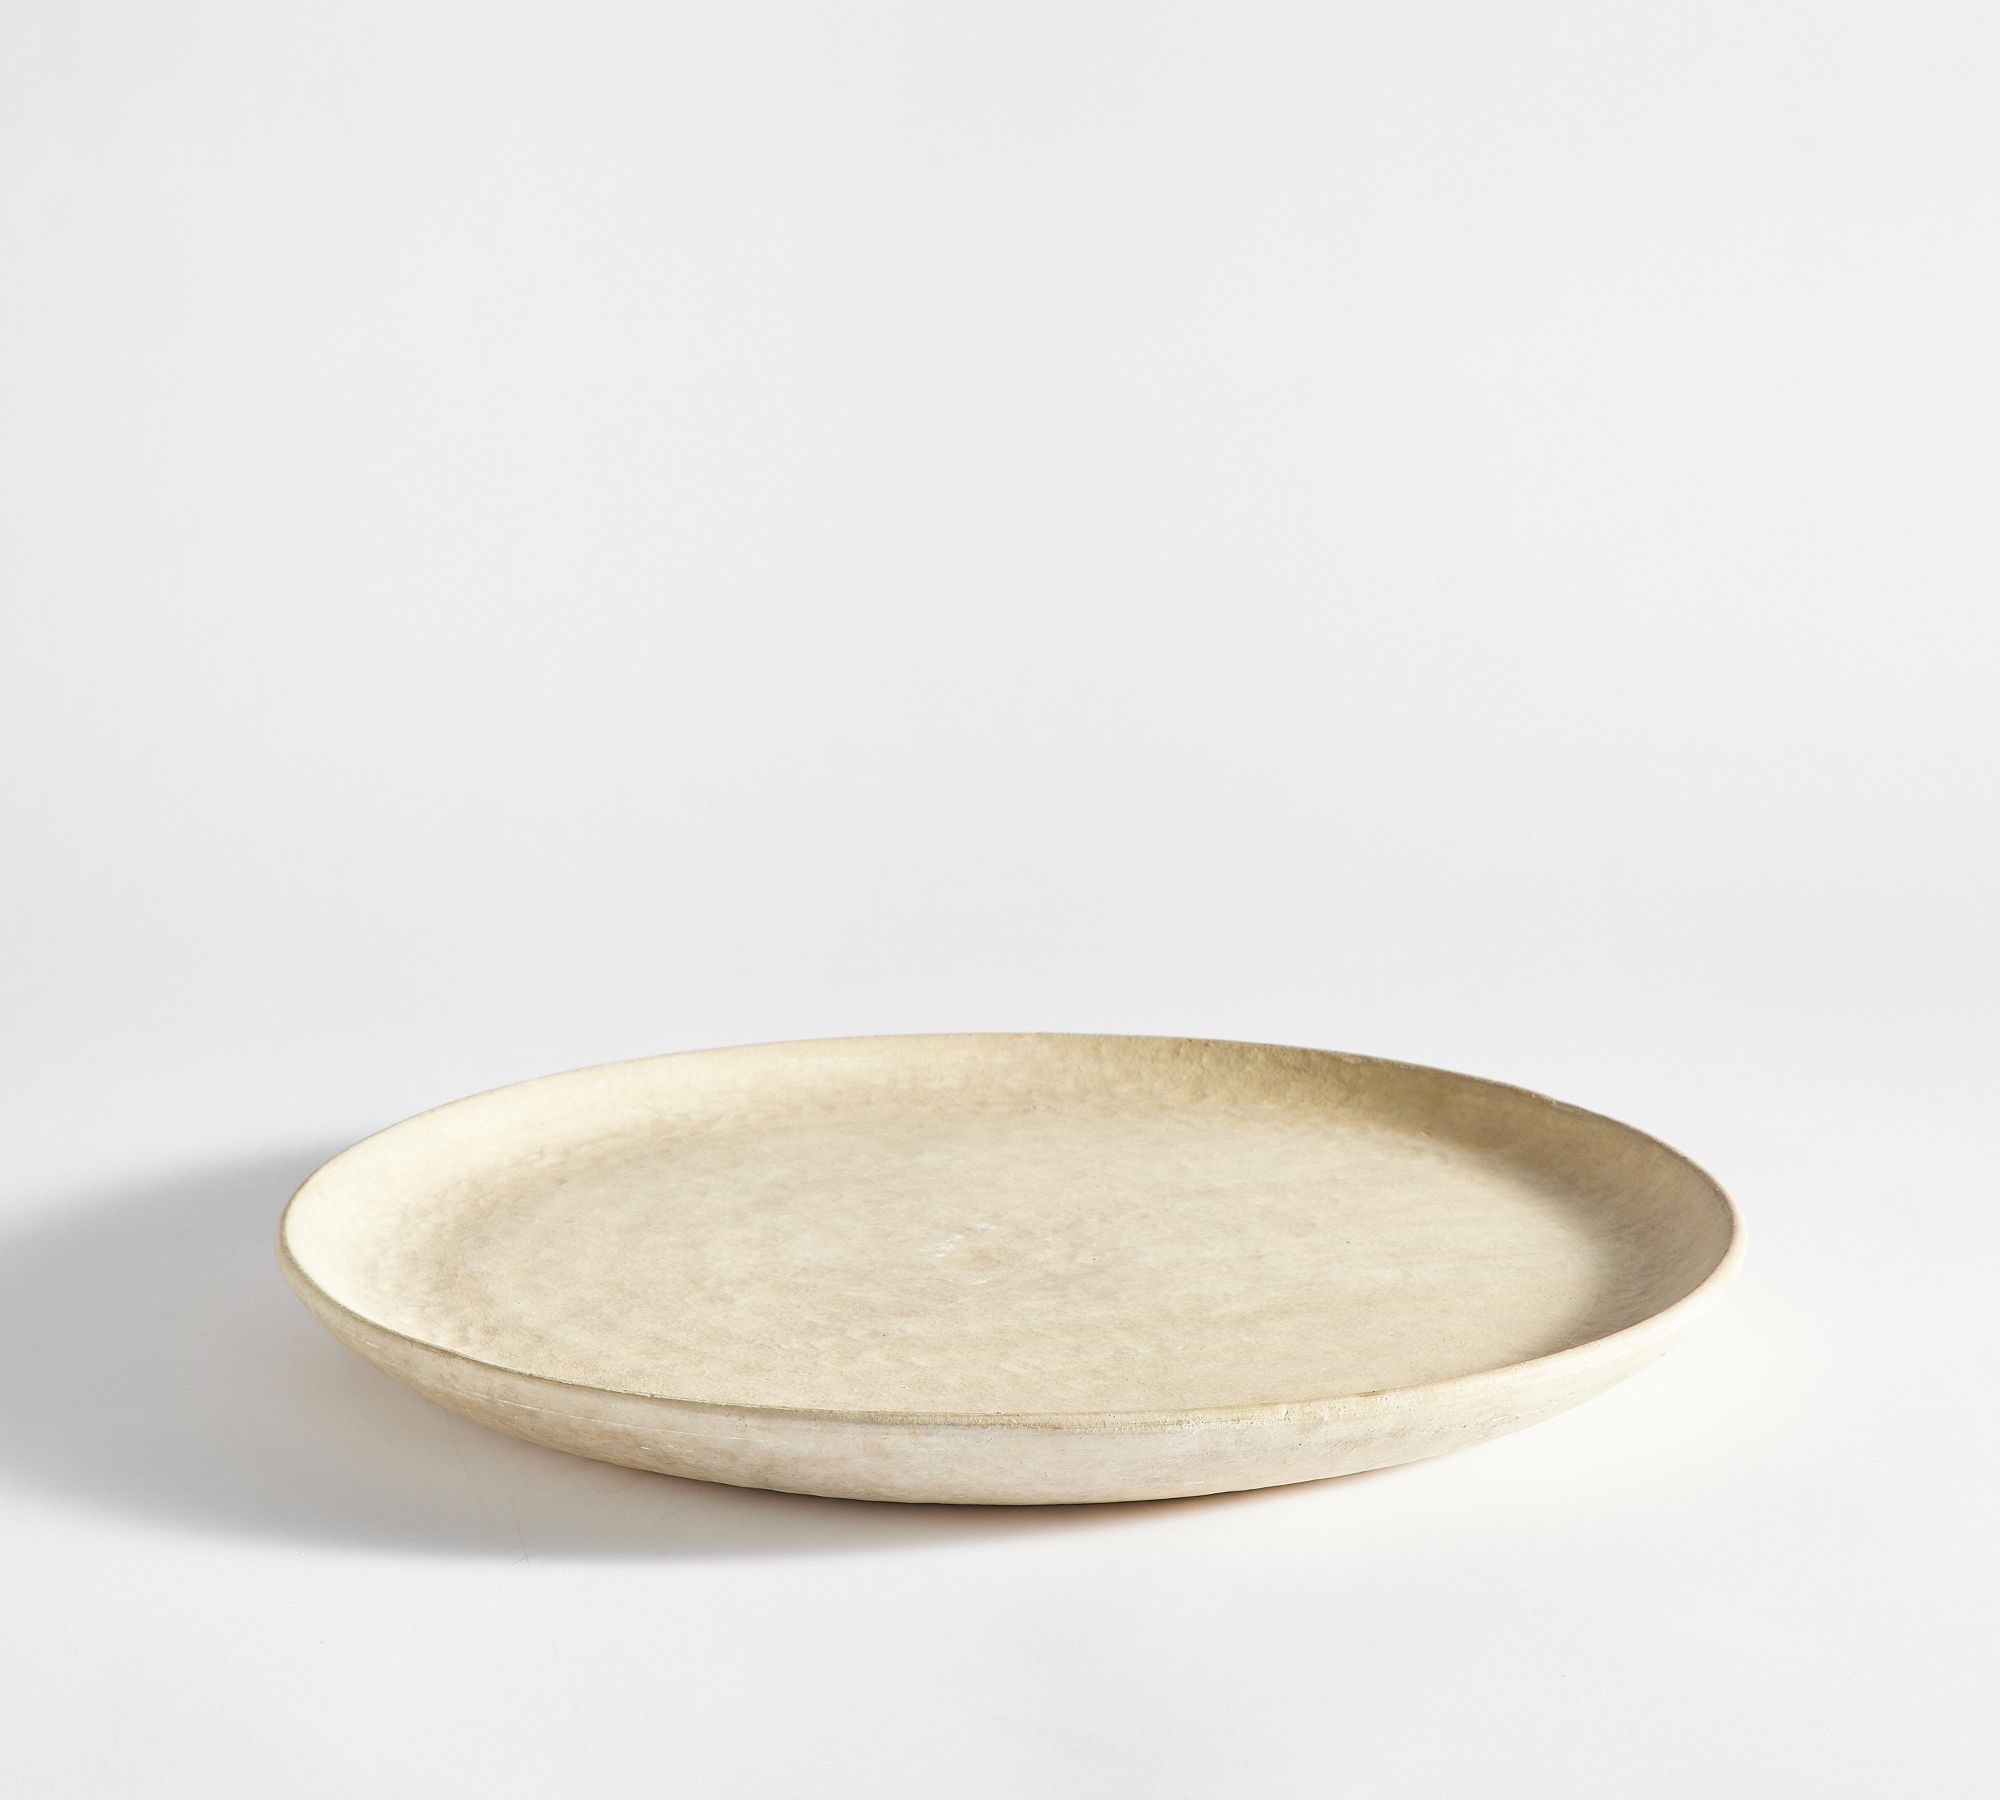 Artisan Studio Handcrafted Ceramic Trays